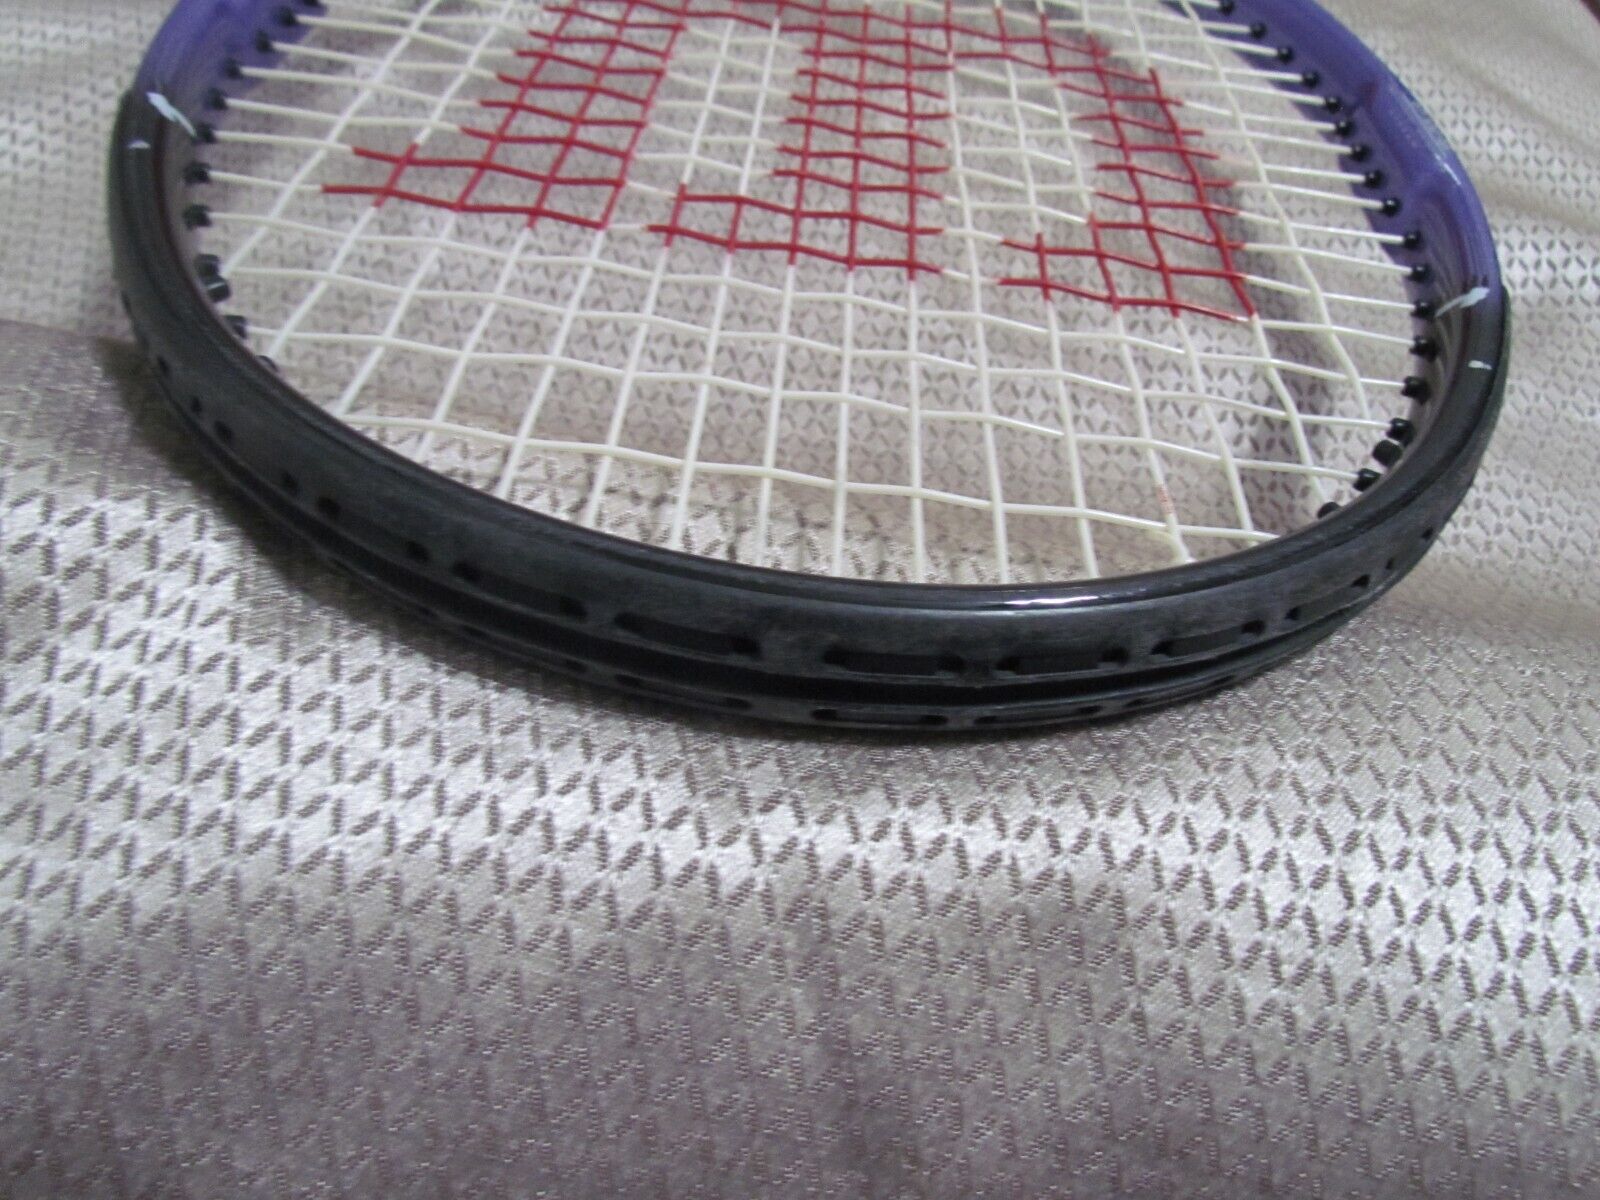 New Wilson Pro Hybrid Tennis Racket Grip size 4 3/8 Model # WRT58390U RACQUET 